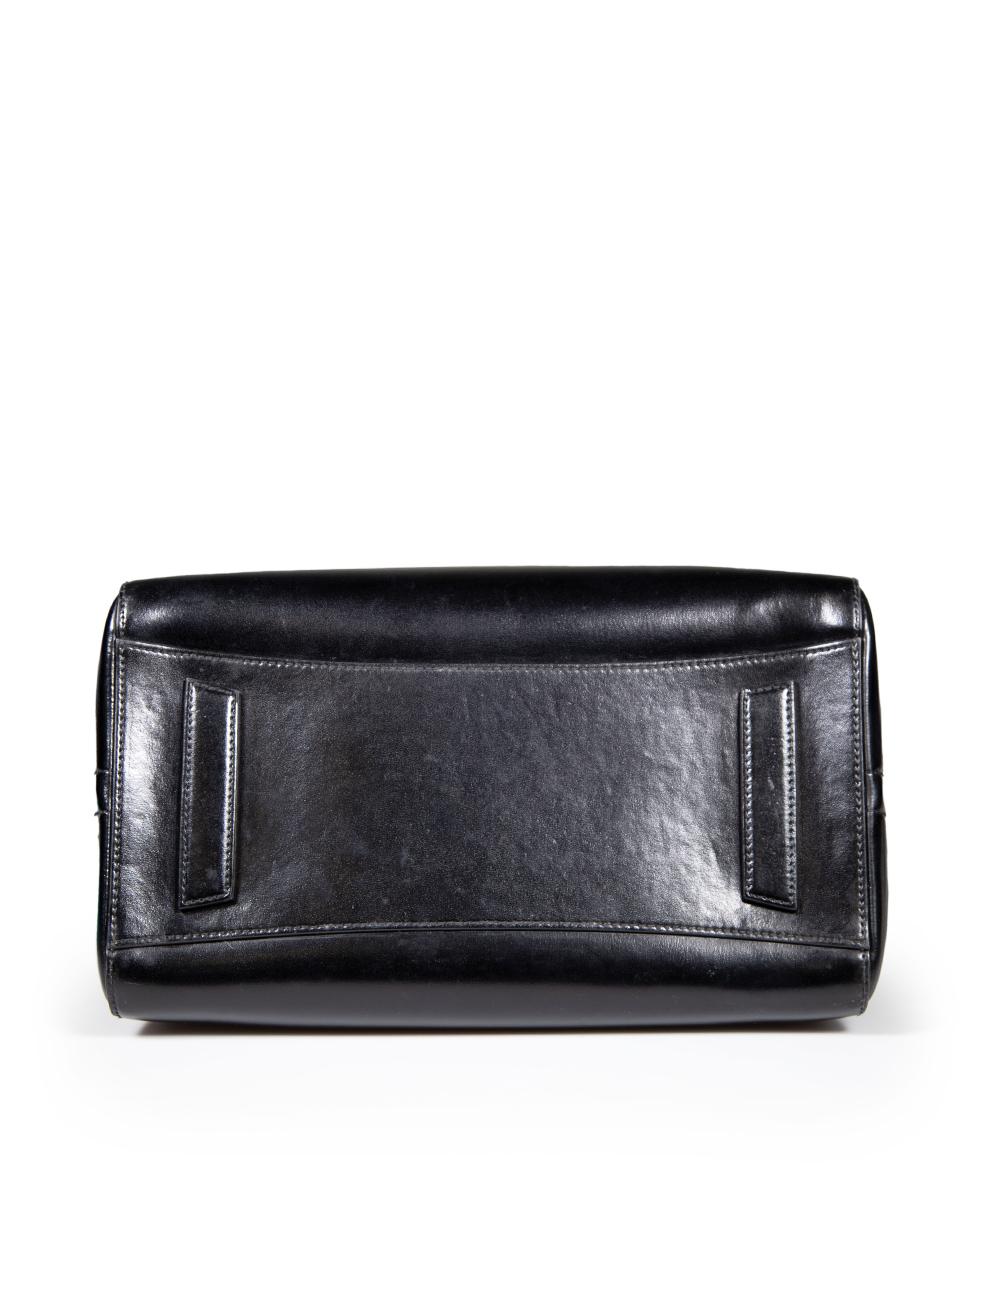 Givenchy, sac à main moyen en cuir Antigona, noir Pour femmes en vente